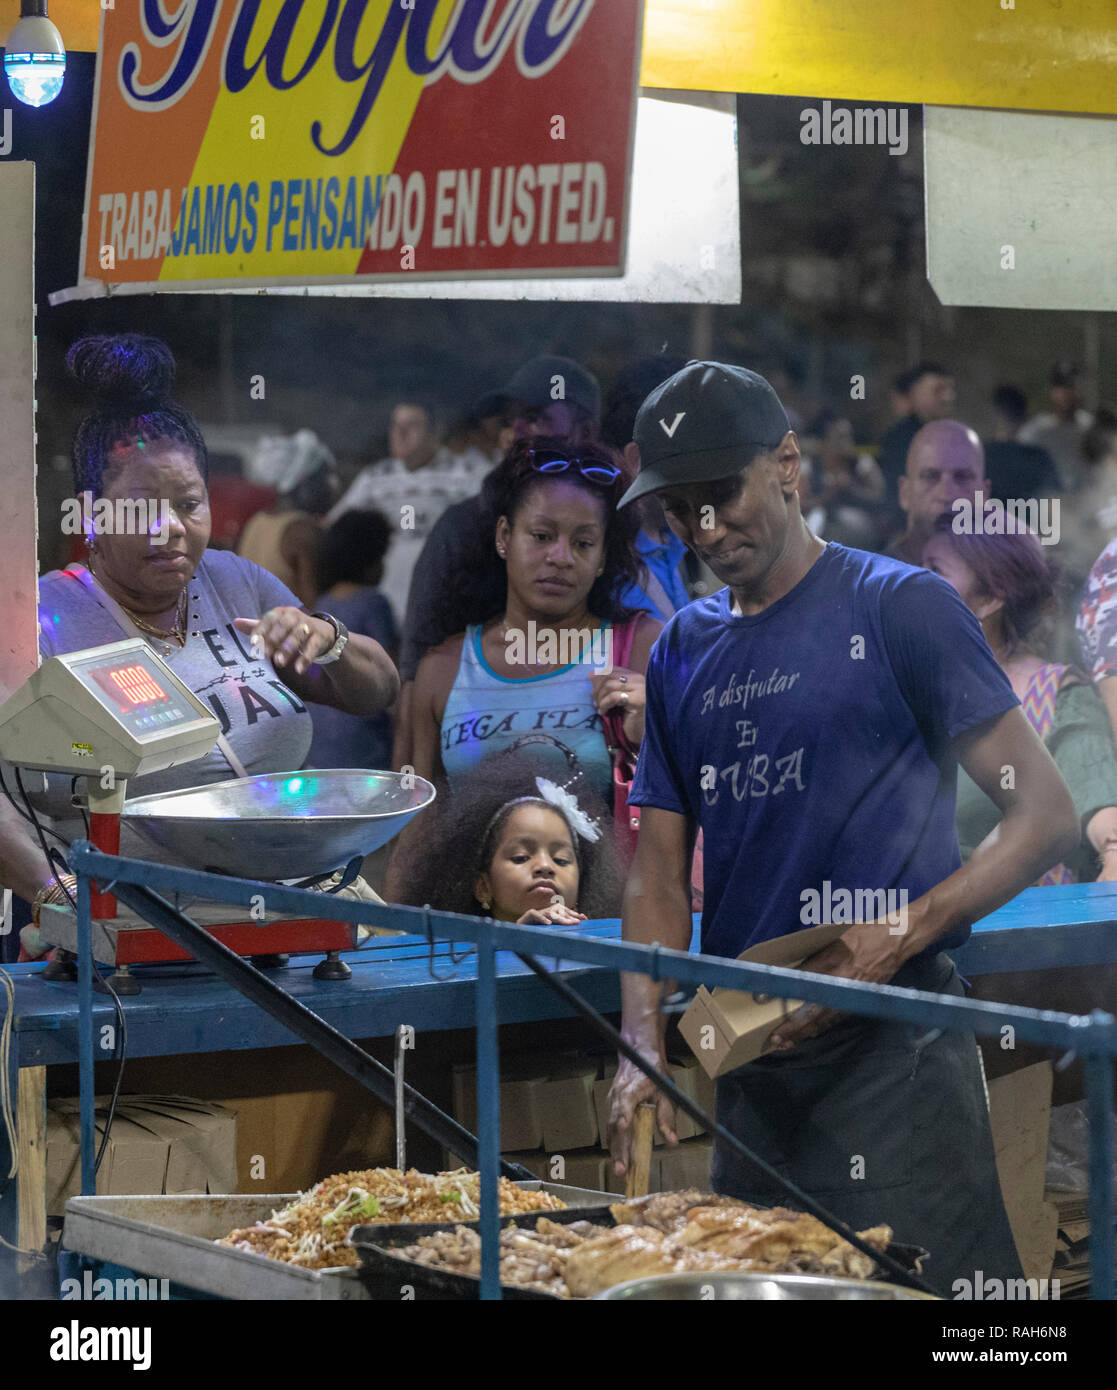 Food vendor dispensing food as little girl looks on, Havana, Cuba Stock Photo